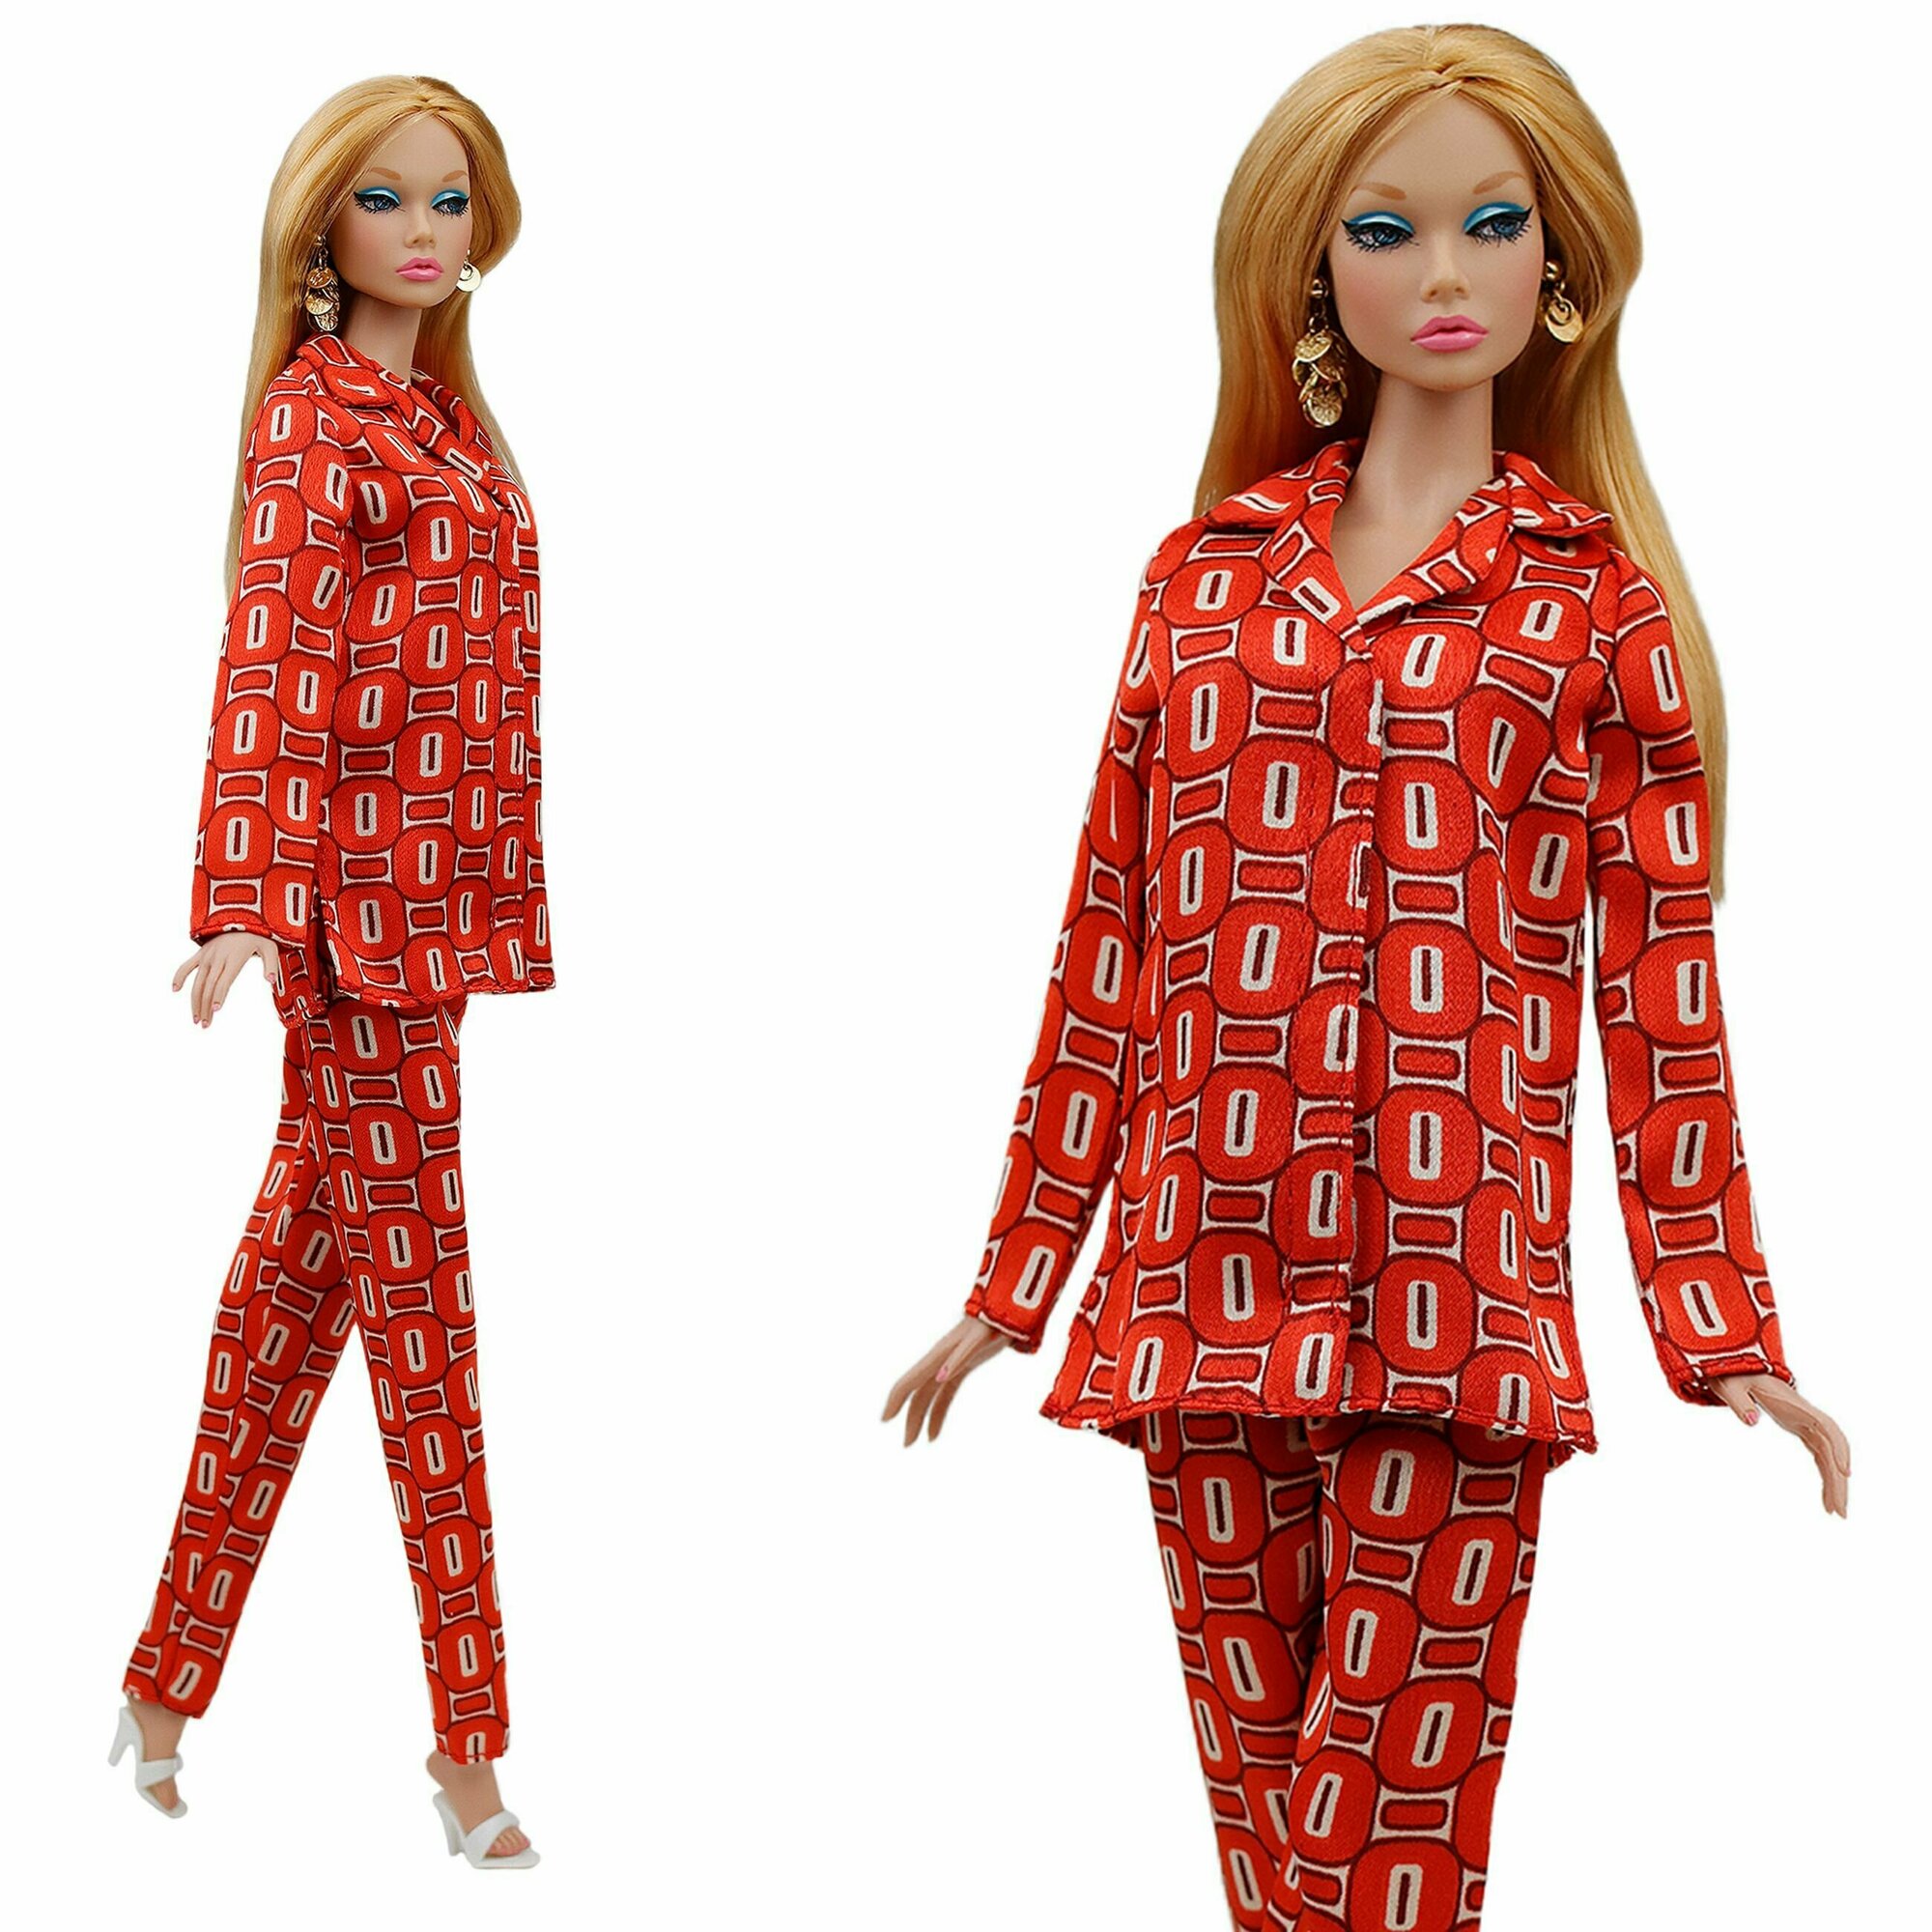 Шелковая пижама "Куколкины сны" цвета "Кирпичики" для кукол 29 см. типа барби